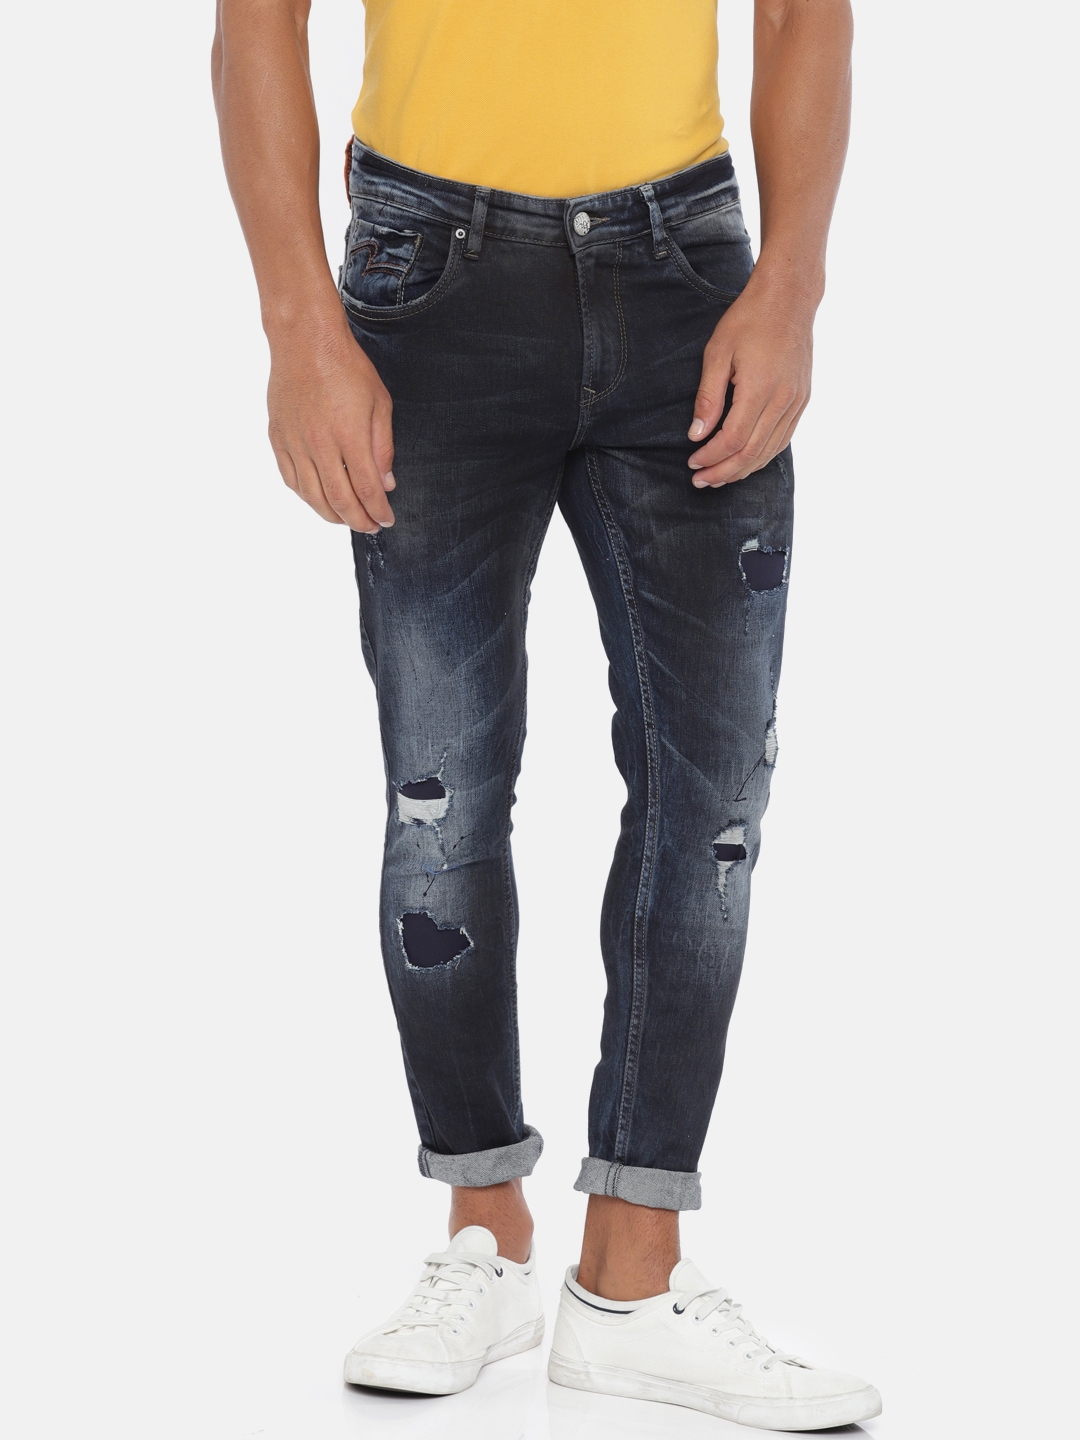 spykar jeans official site